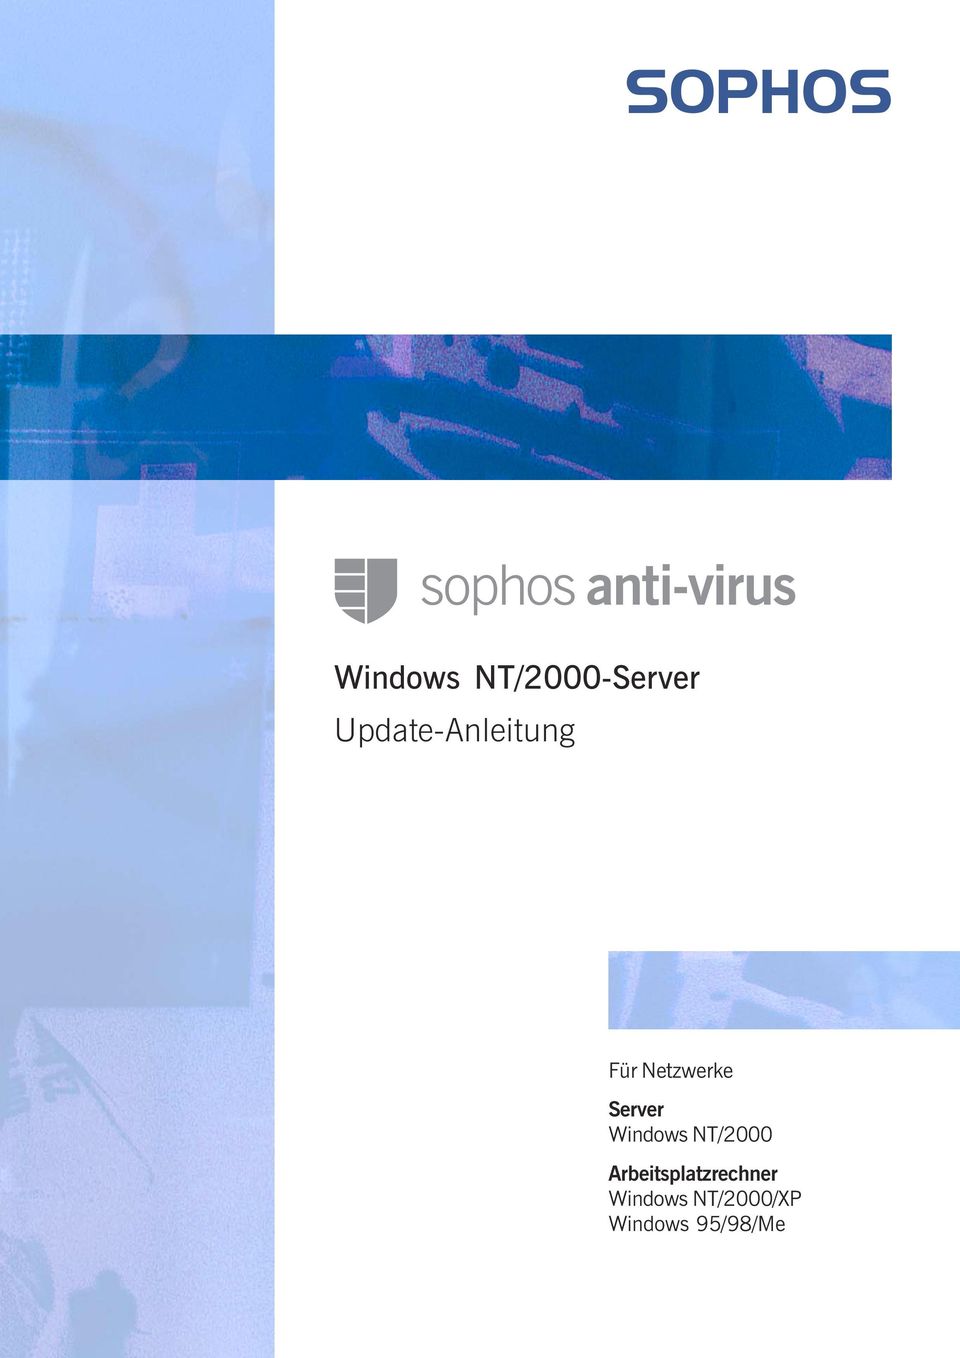 Server Windows NT/2000